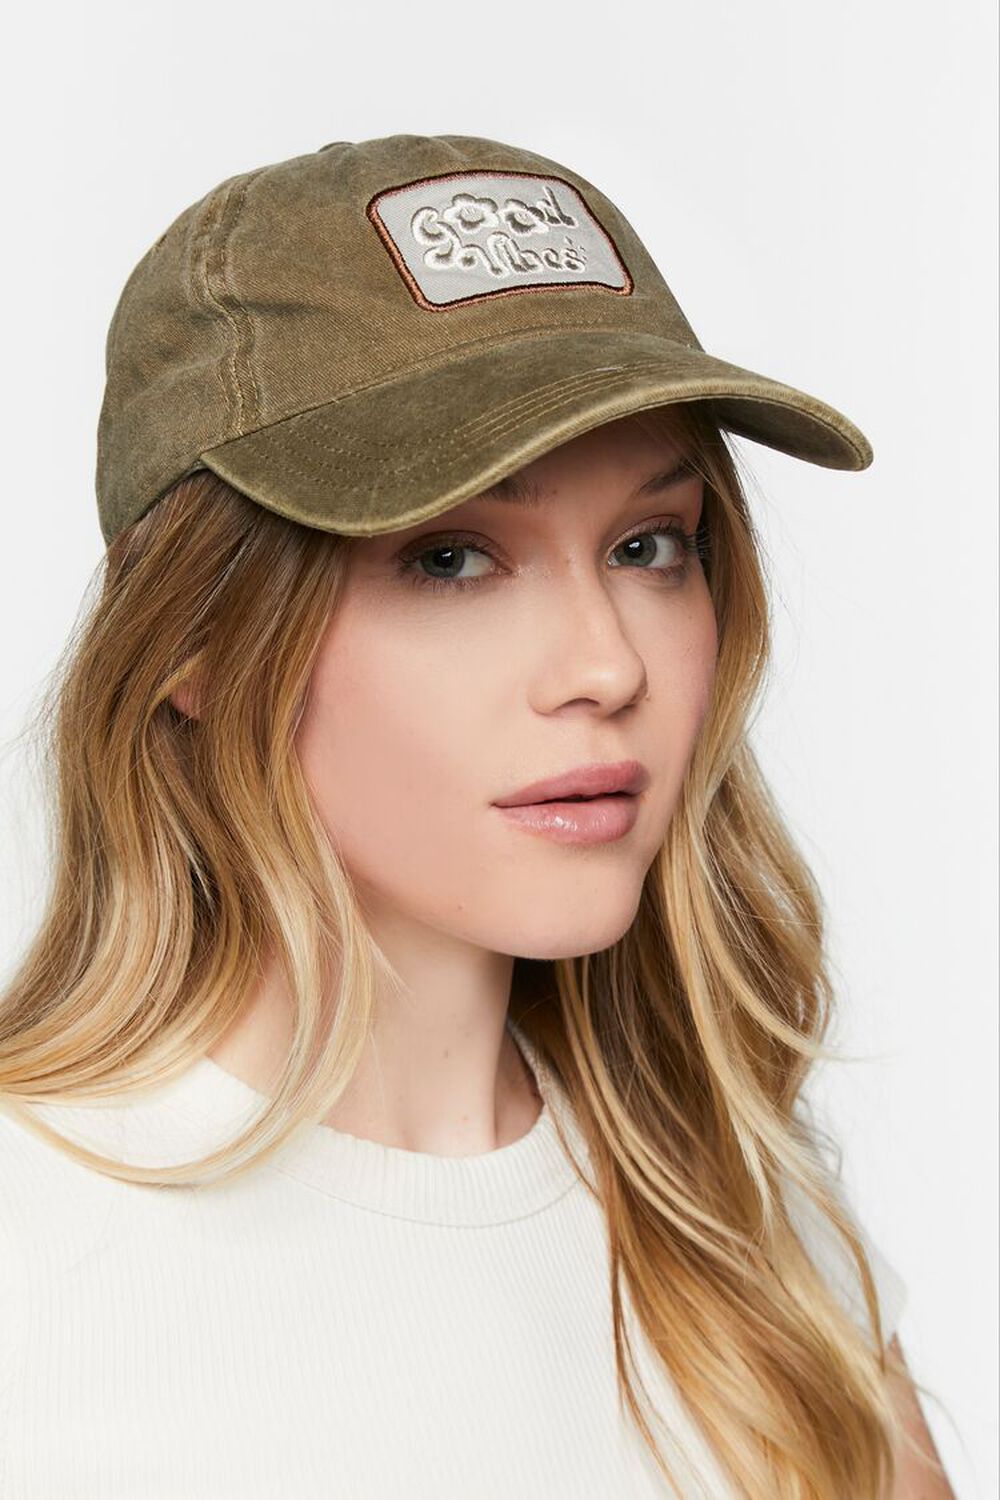 BISENMADE Baseball Cap For Men And Women Fashion Soft Top Hats